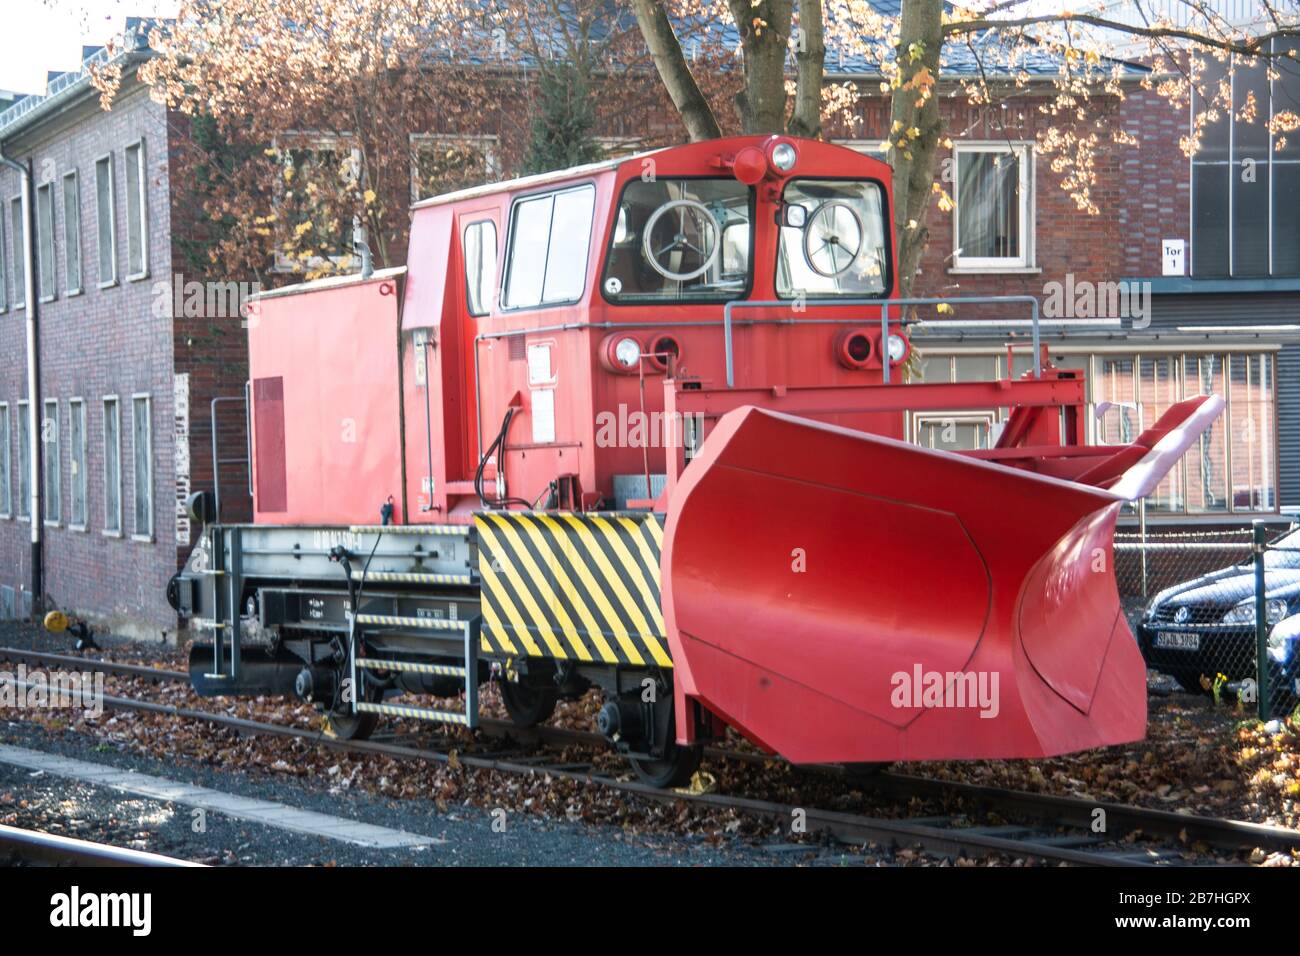 Locomotive shed for shunting locomotives Stock Photo